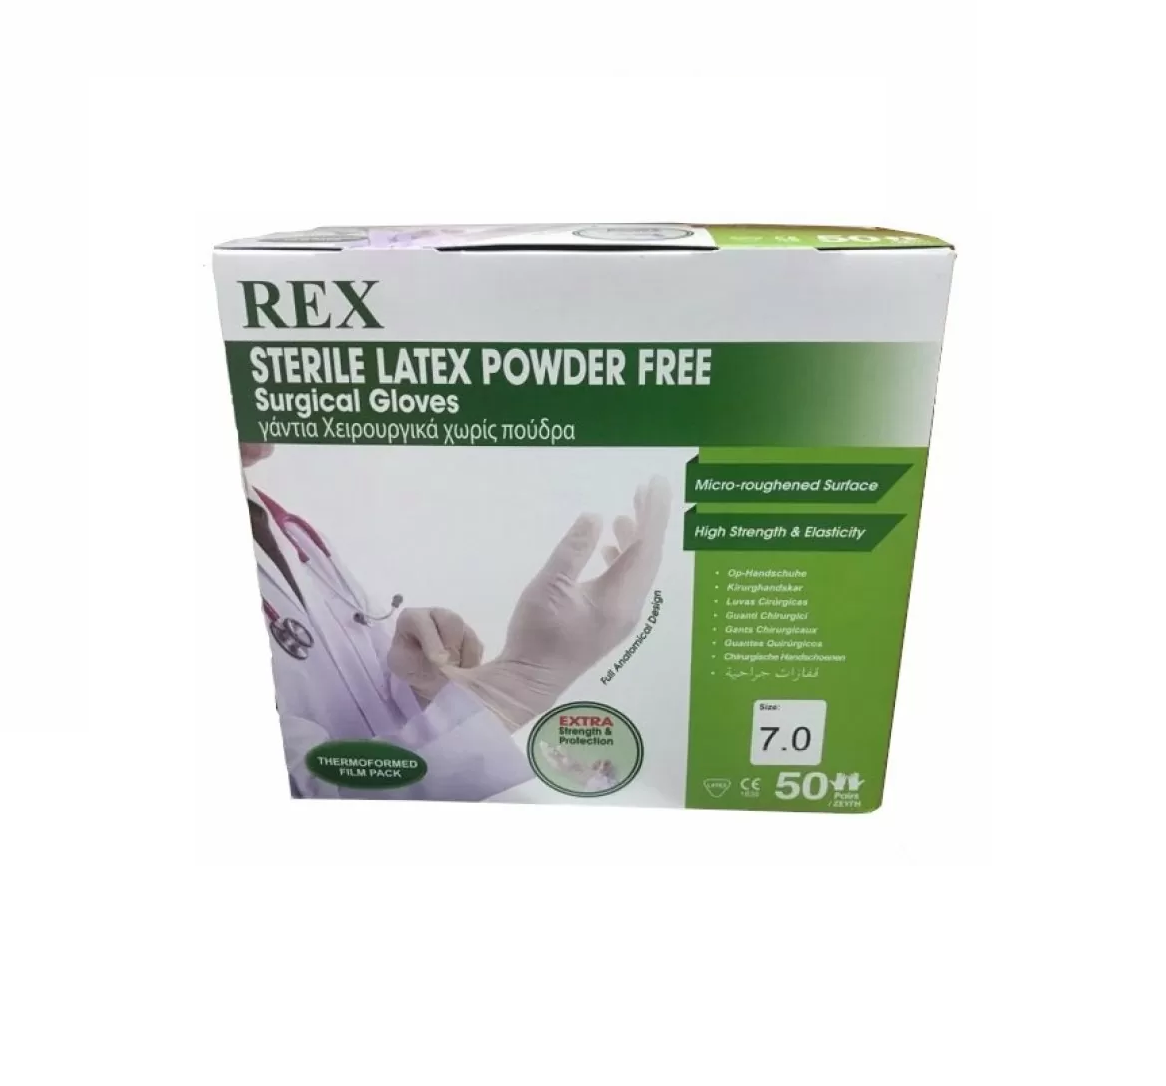 REX Γάντια αποστειρωμένα χωρίς πούδρα RXSTNP70 7.0 - 50 ζεύγη